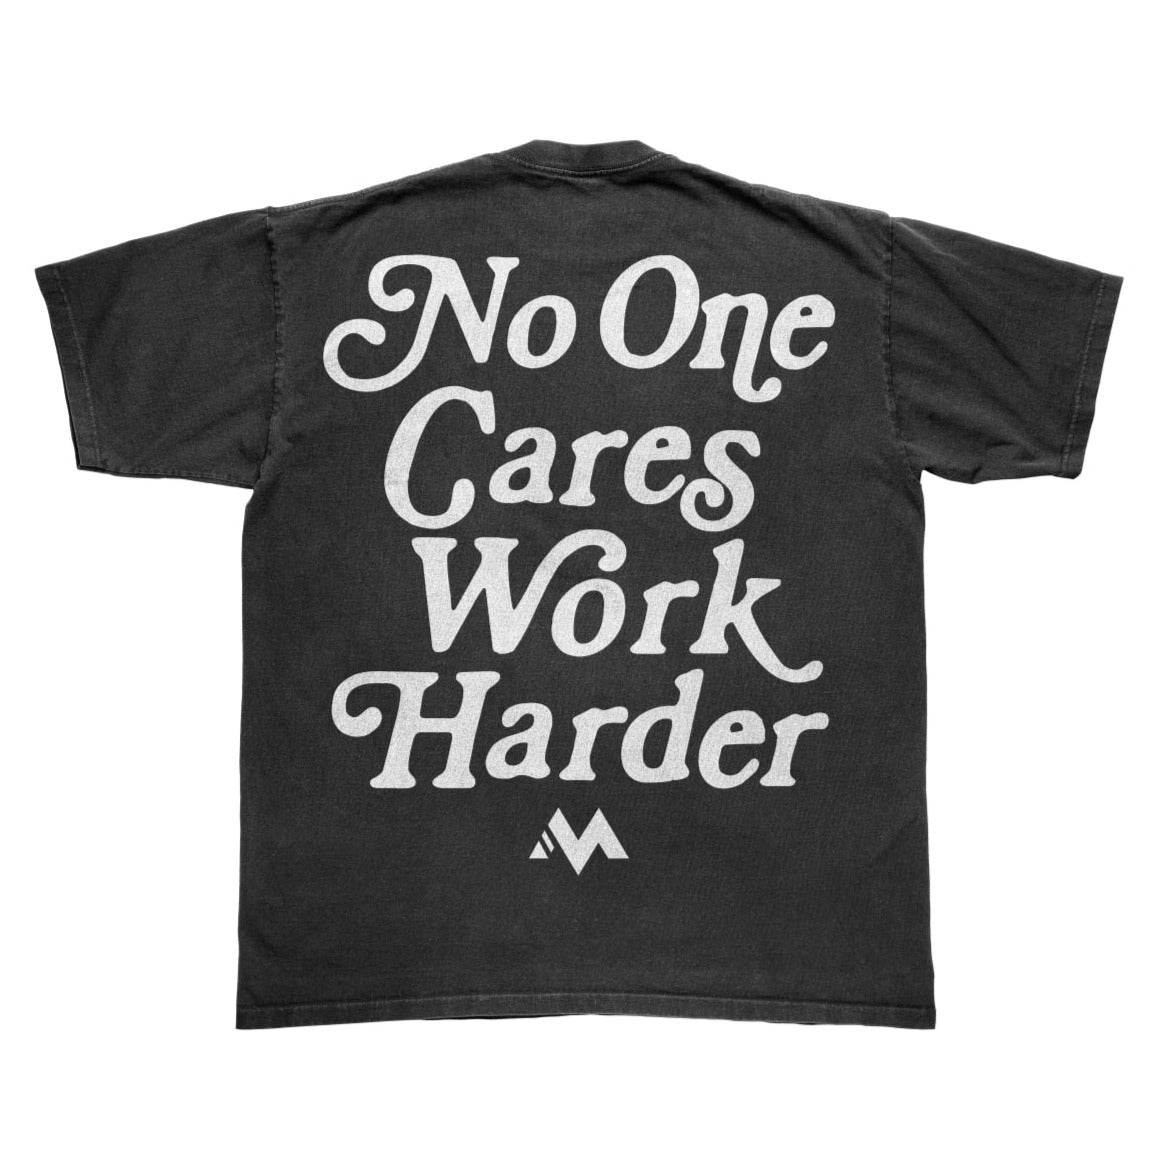 'NO ONE CARES WORK HARDER' TEE - VINTAGE BLACK